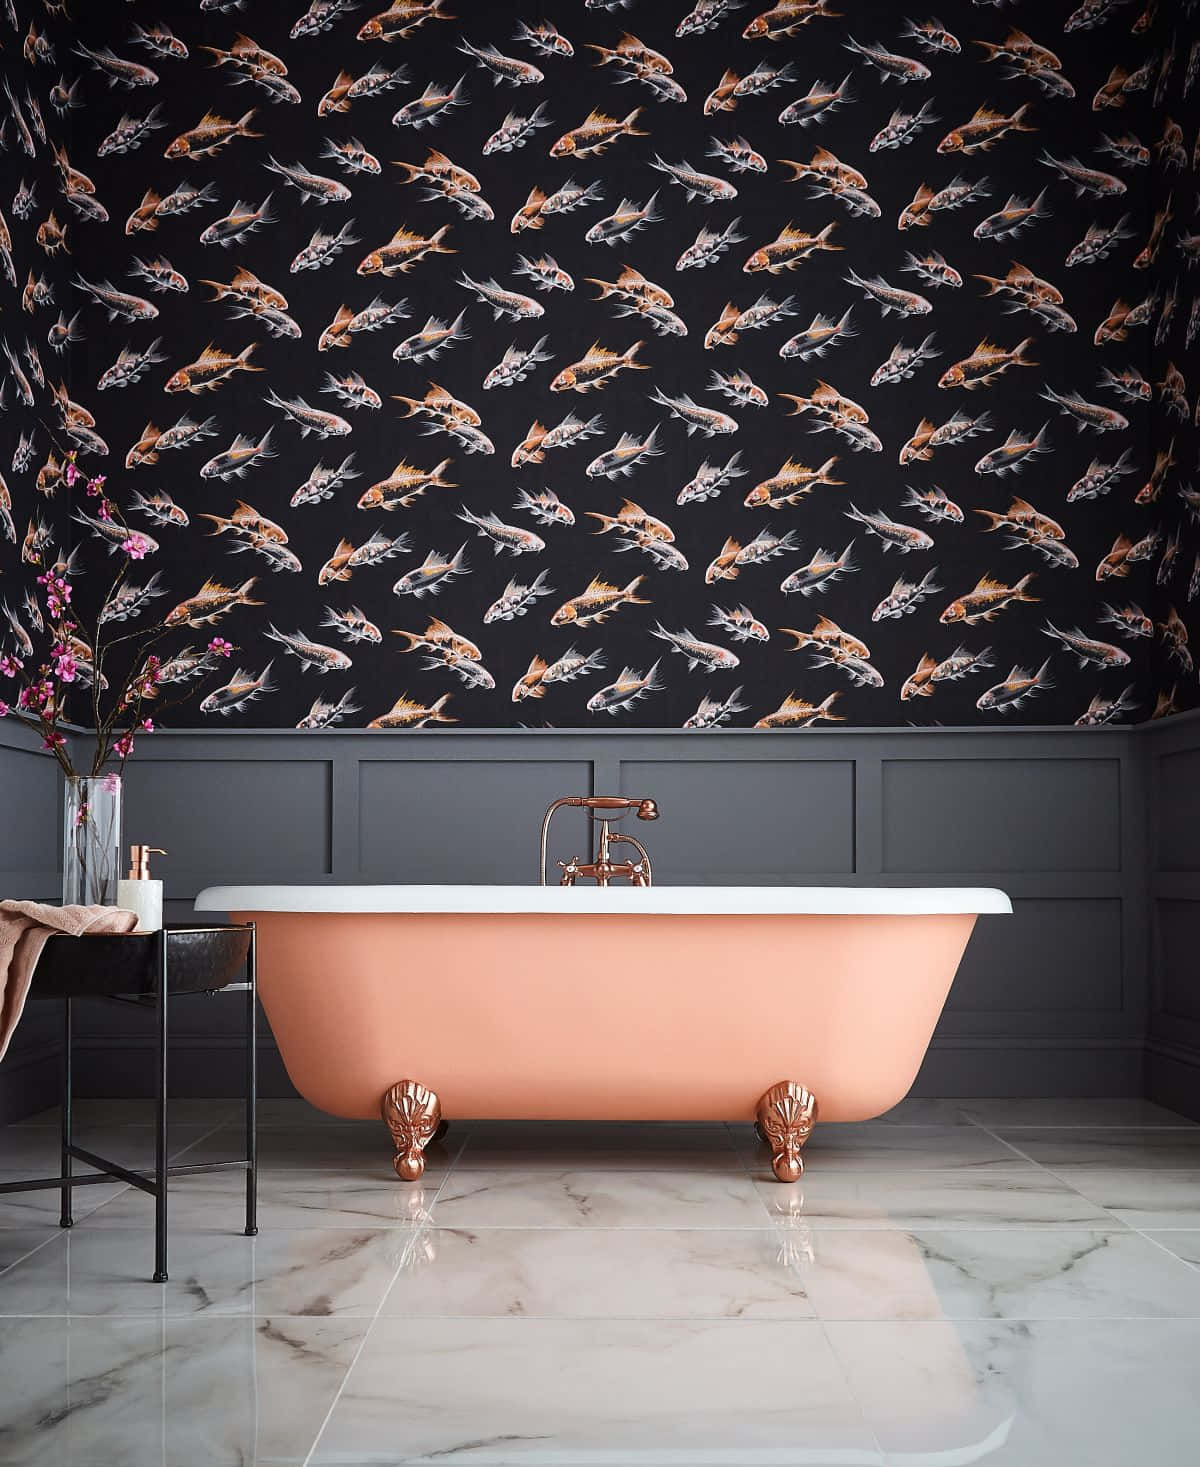 Bathroom Fish Patterned Walls Wallpaper